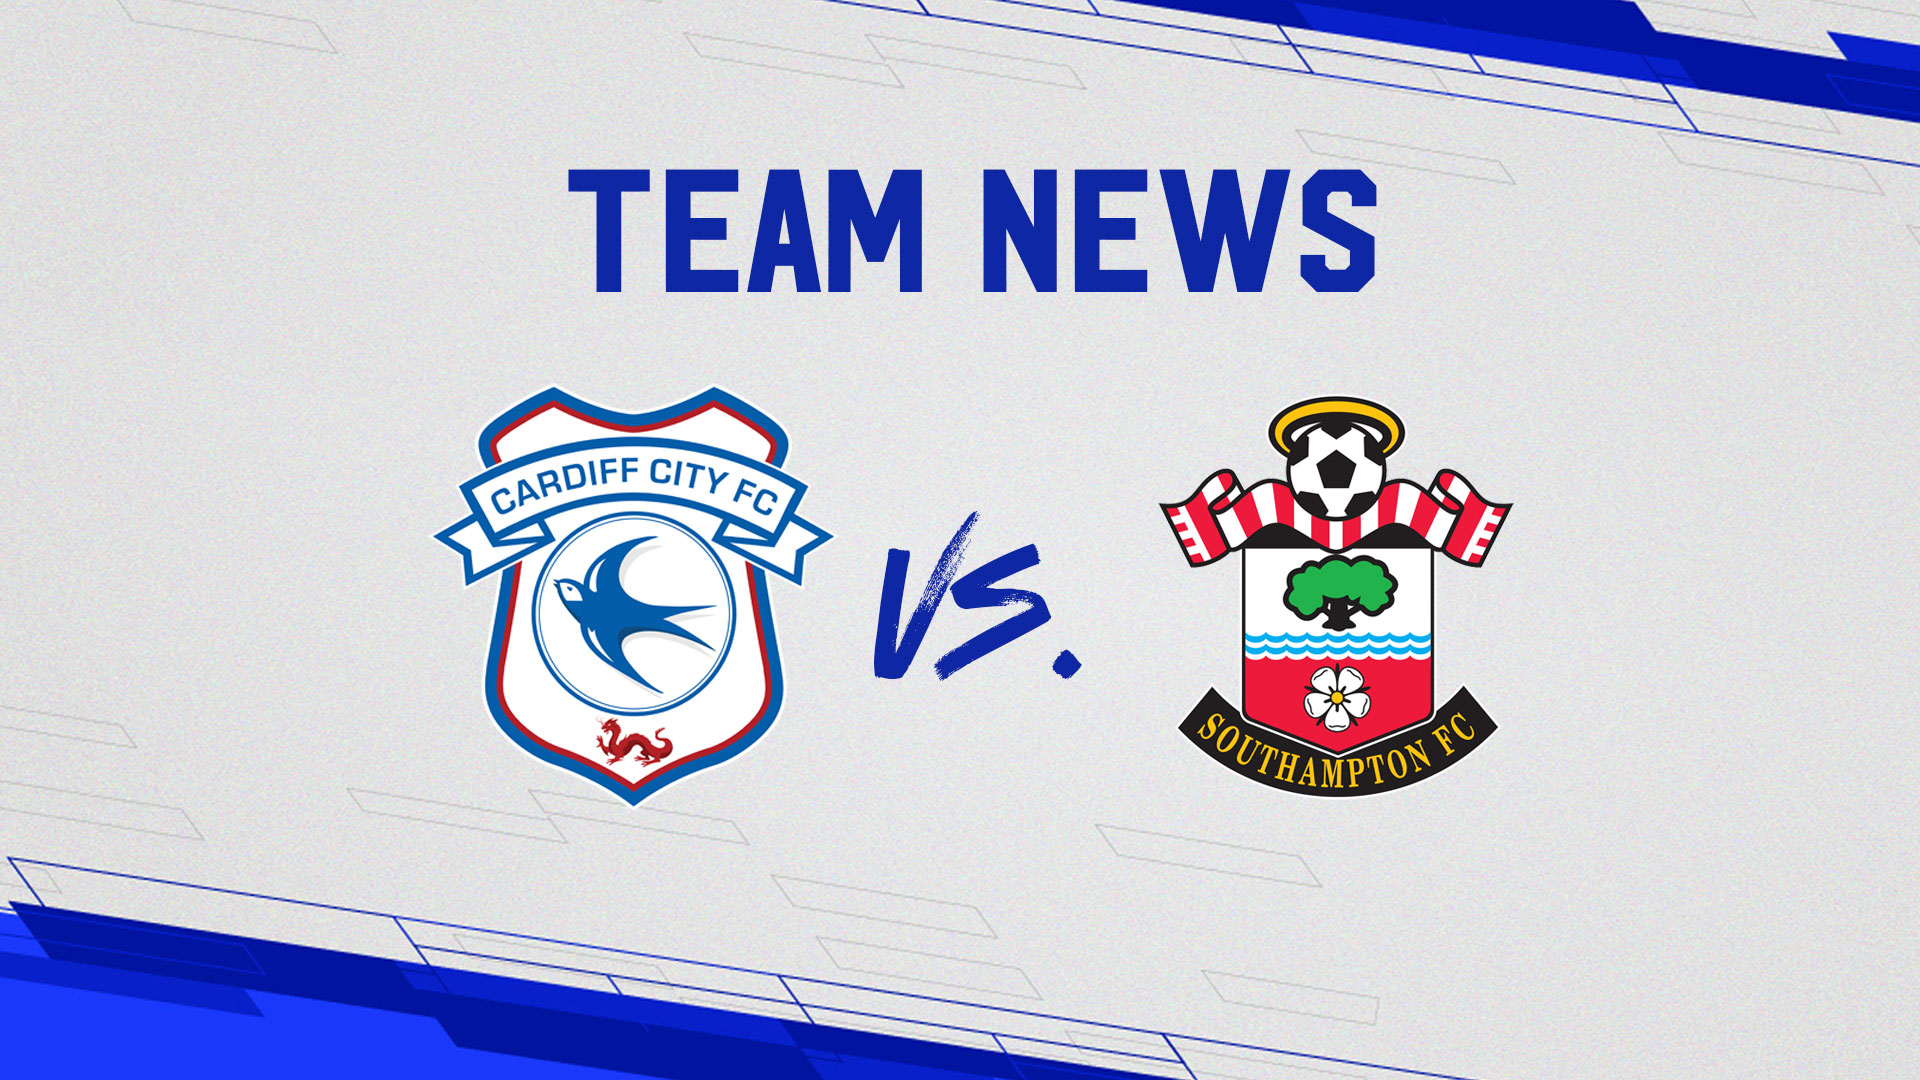 Team News: Cardiff City vs. Southampton